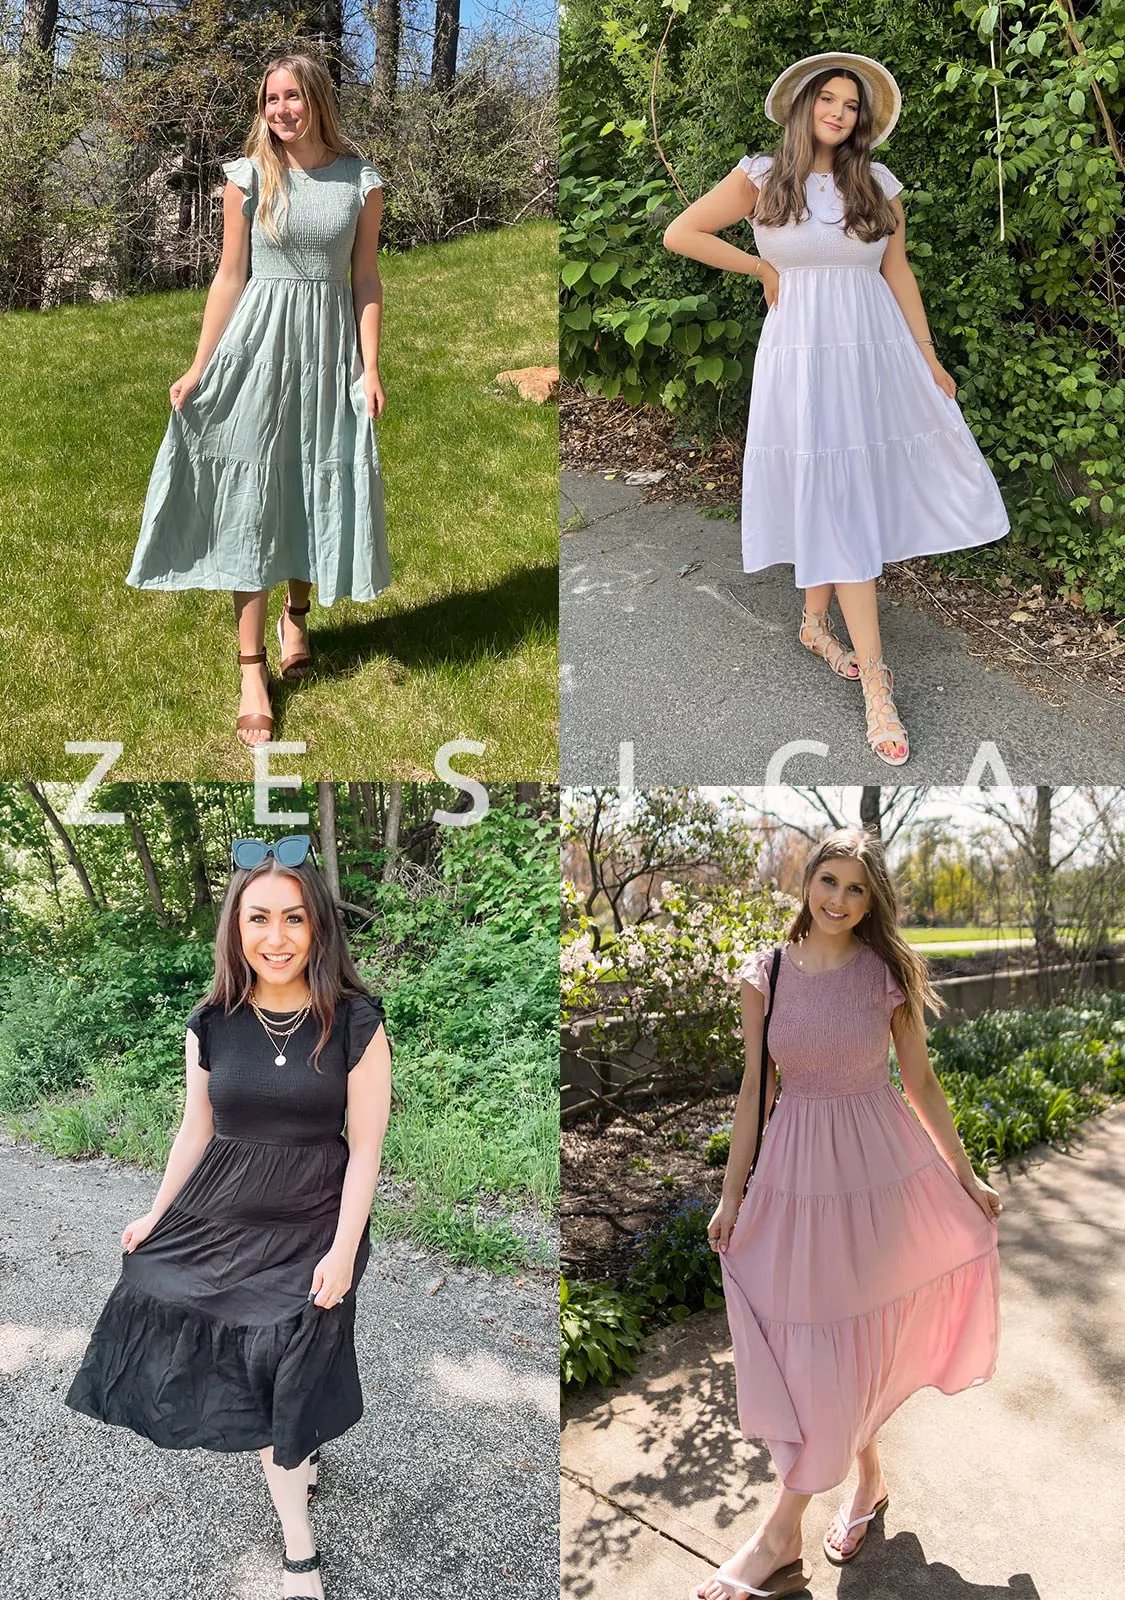 alwaysdwell™ - Women's summer casual flowing short midi dress